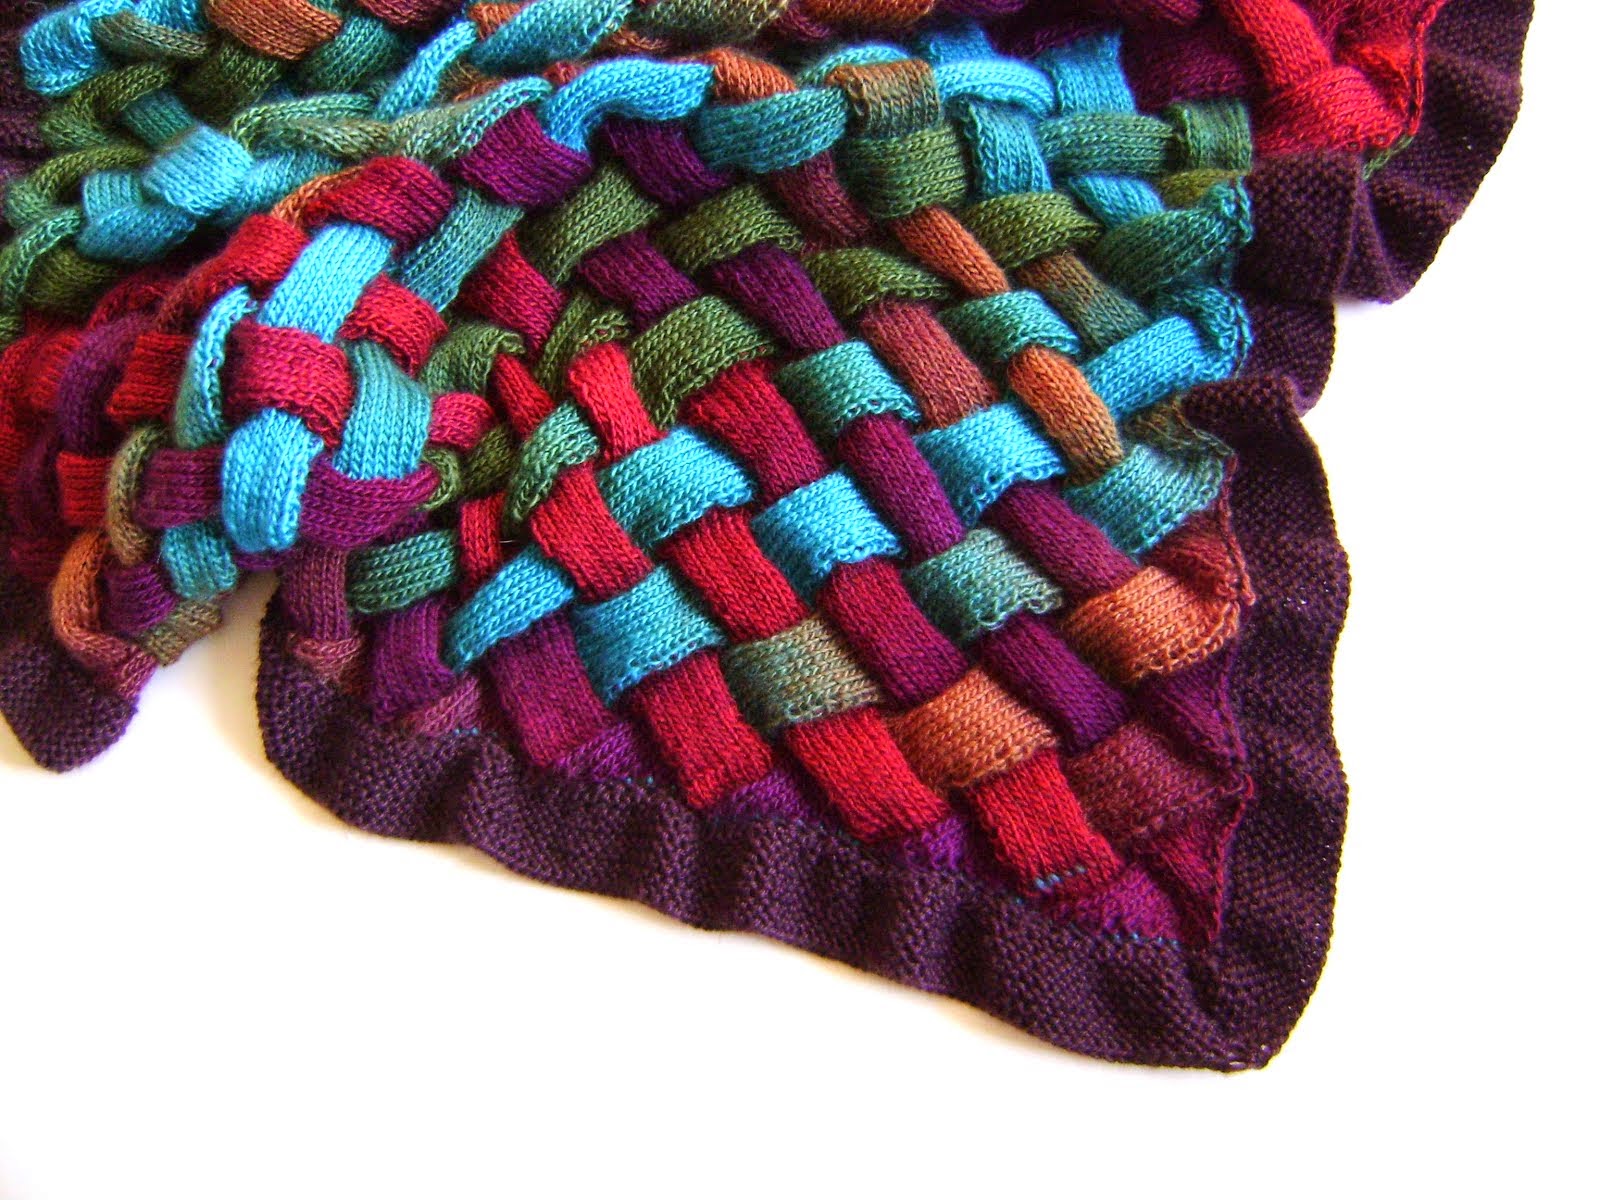 Knit an Entrelac Blanket $5.00